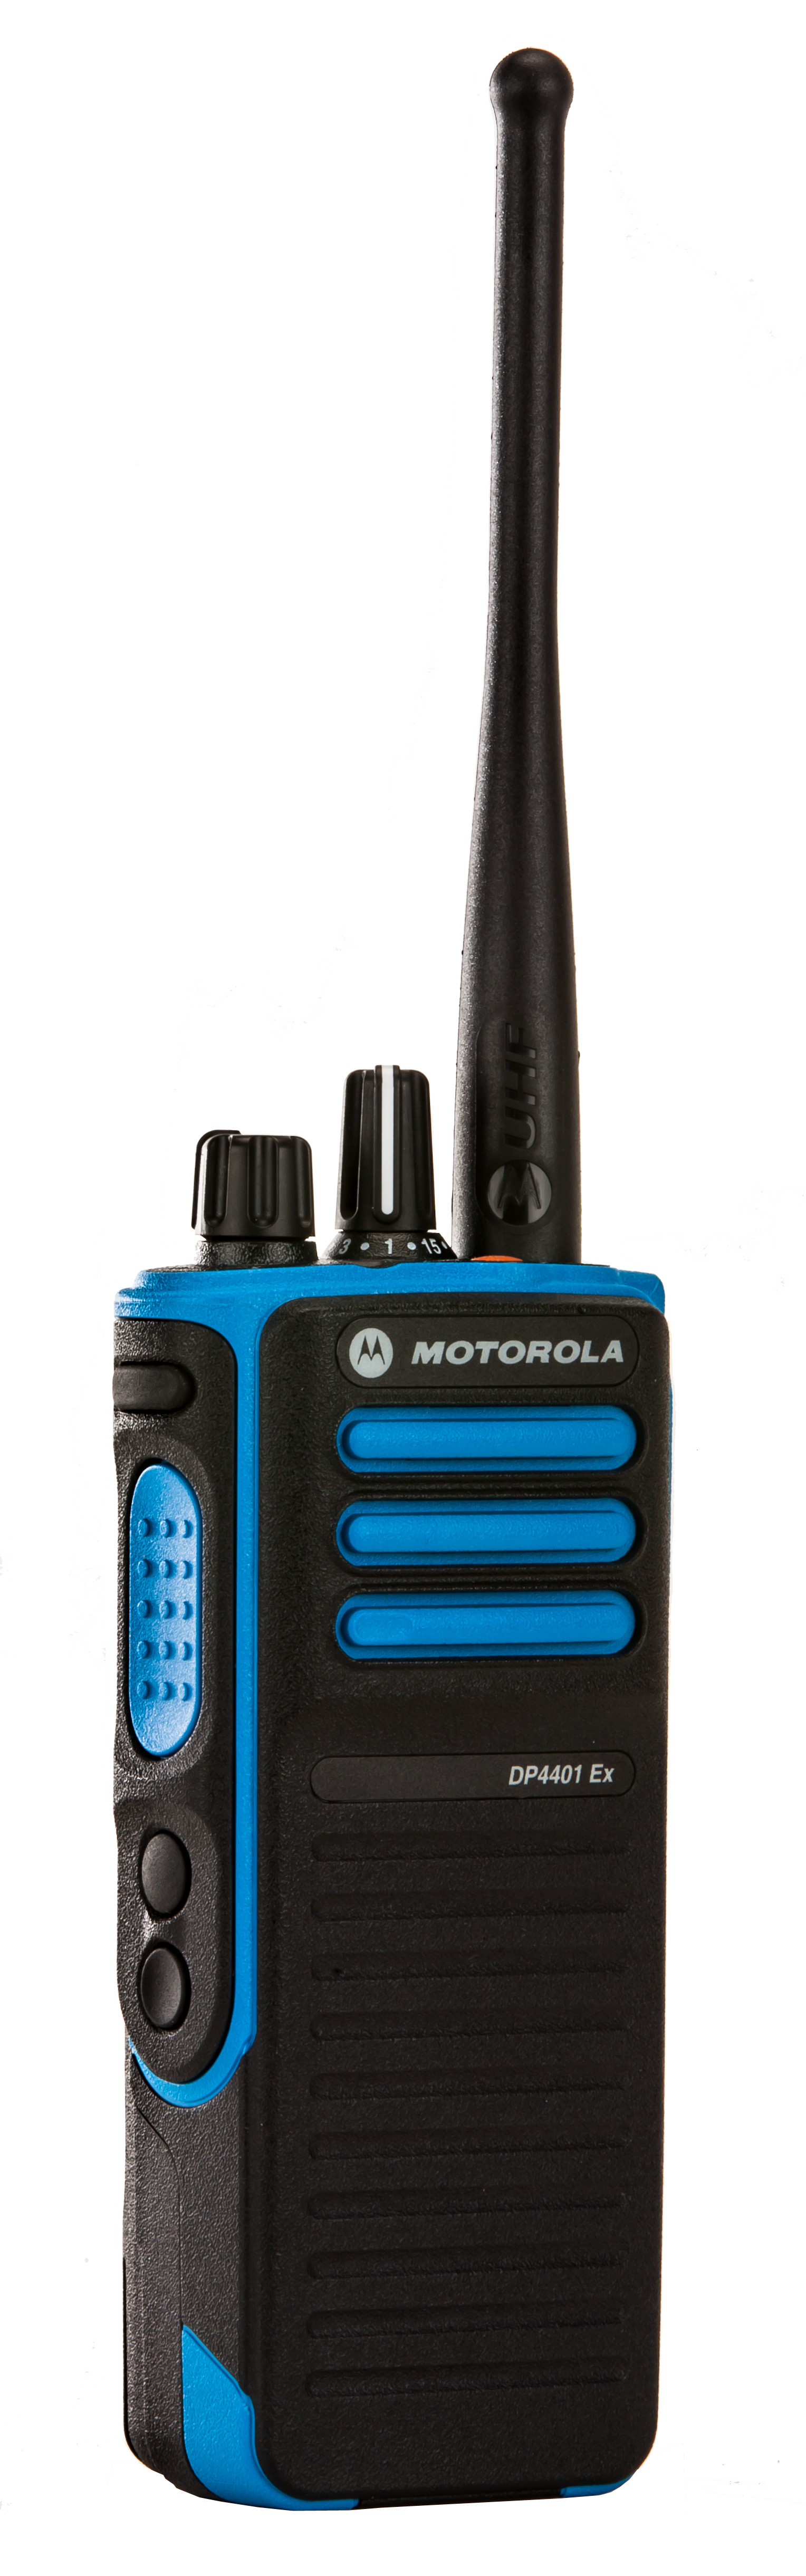 Motorola DP4401 Ex